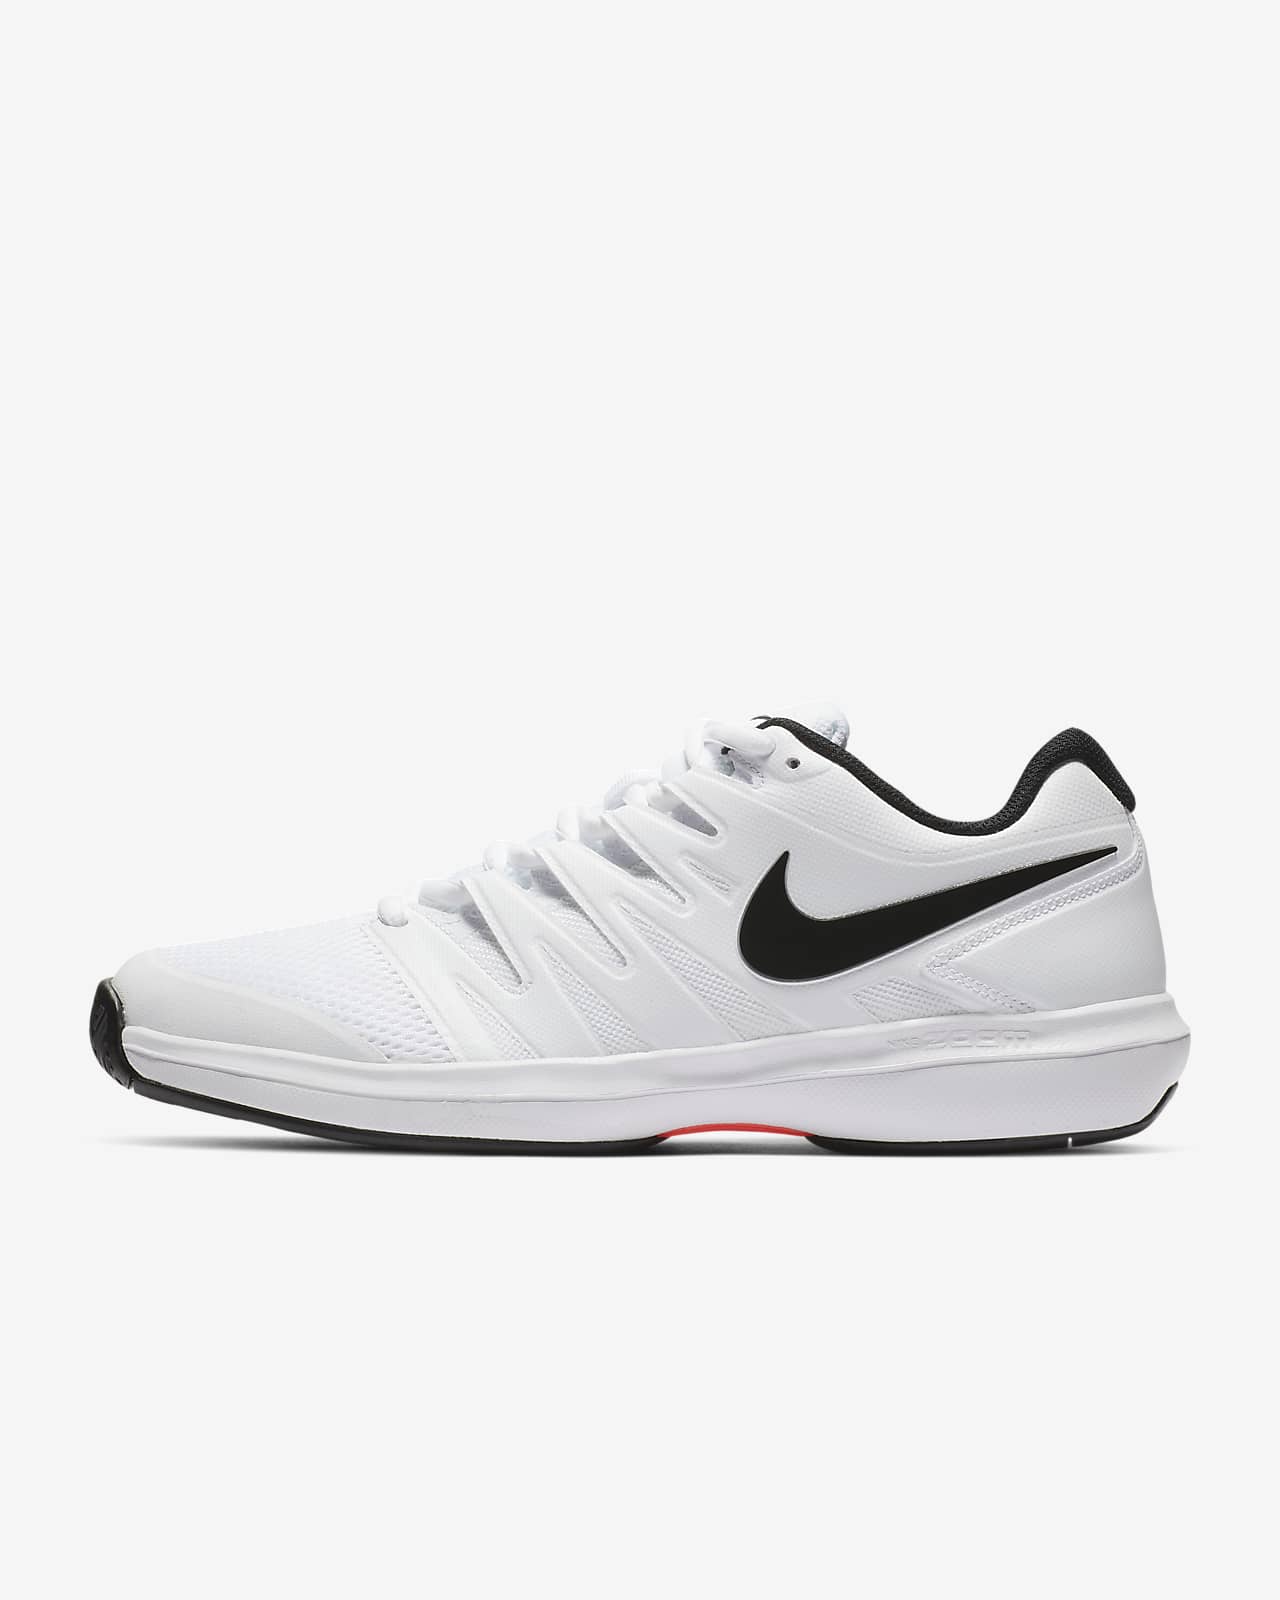 NikeCourt Air Zoom Prestige Men's Tennis Shoe